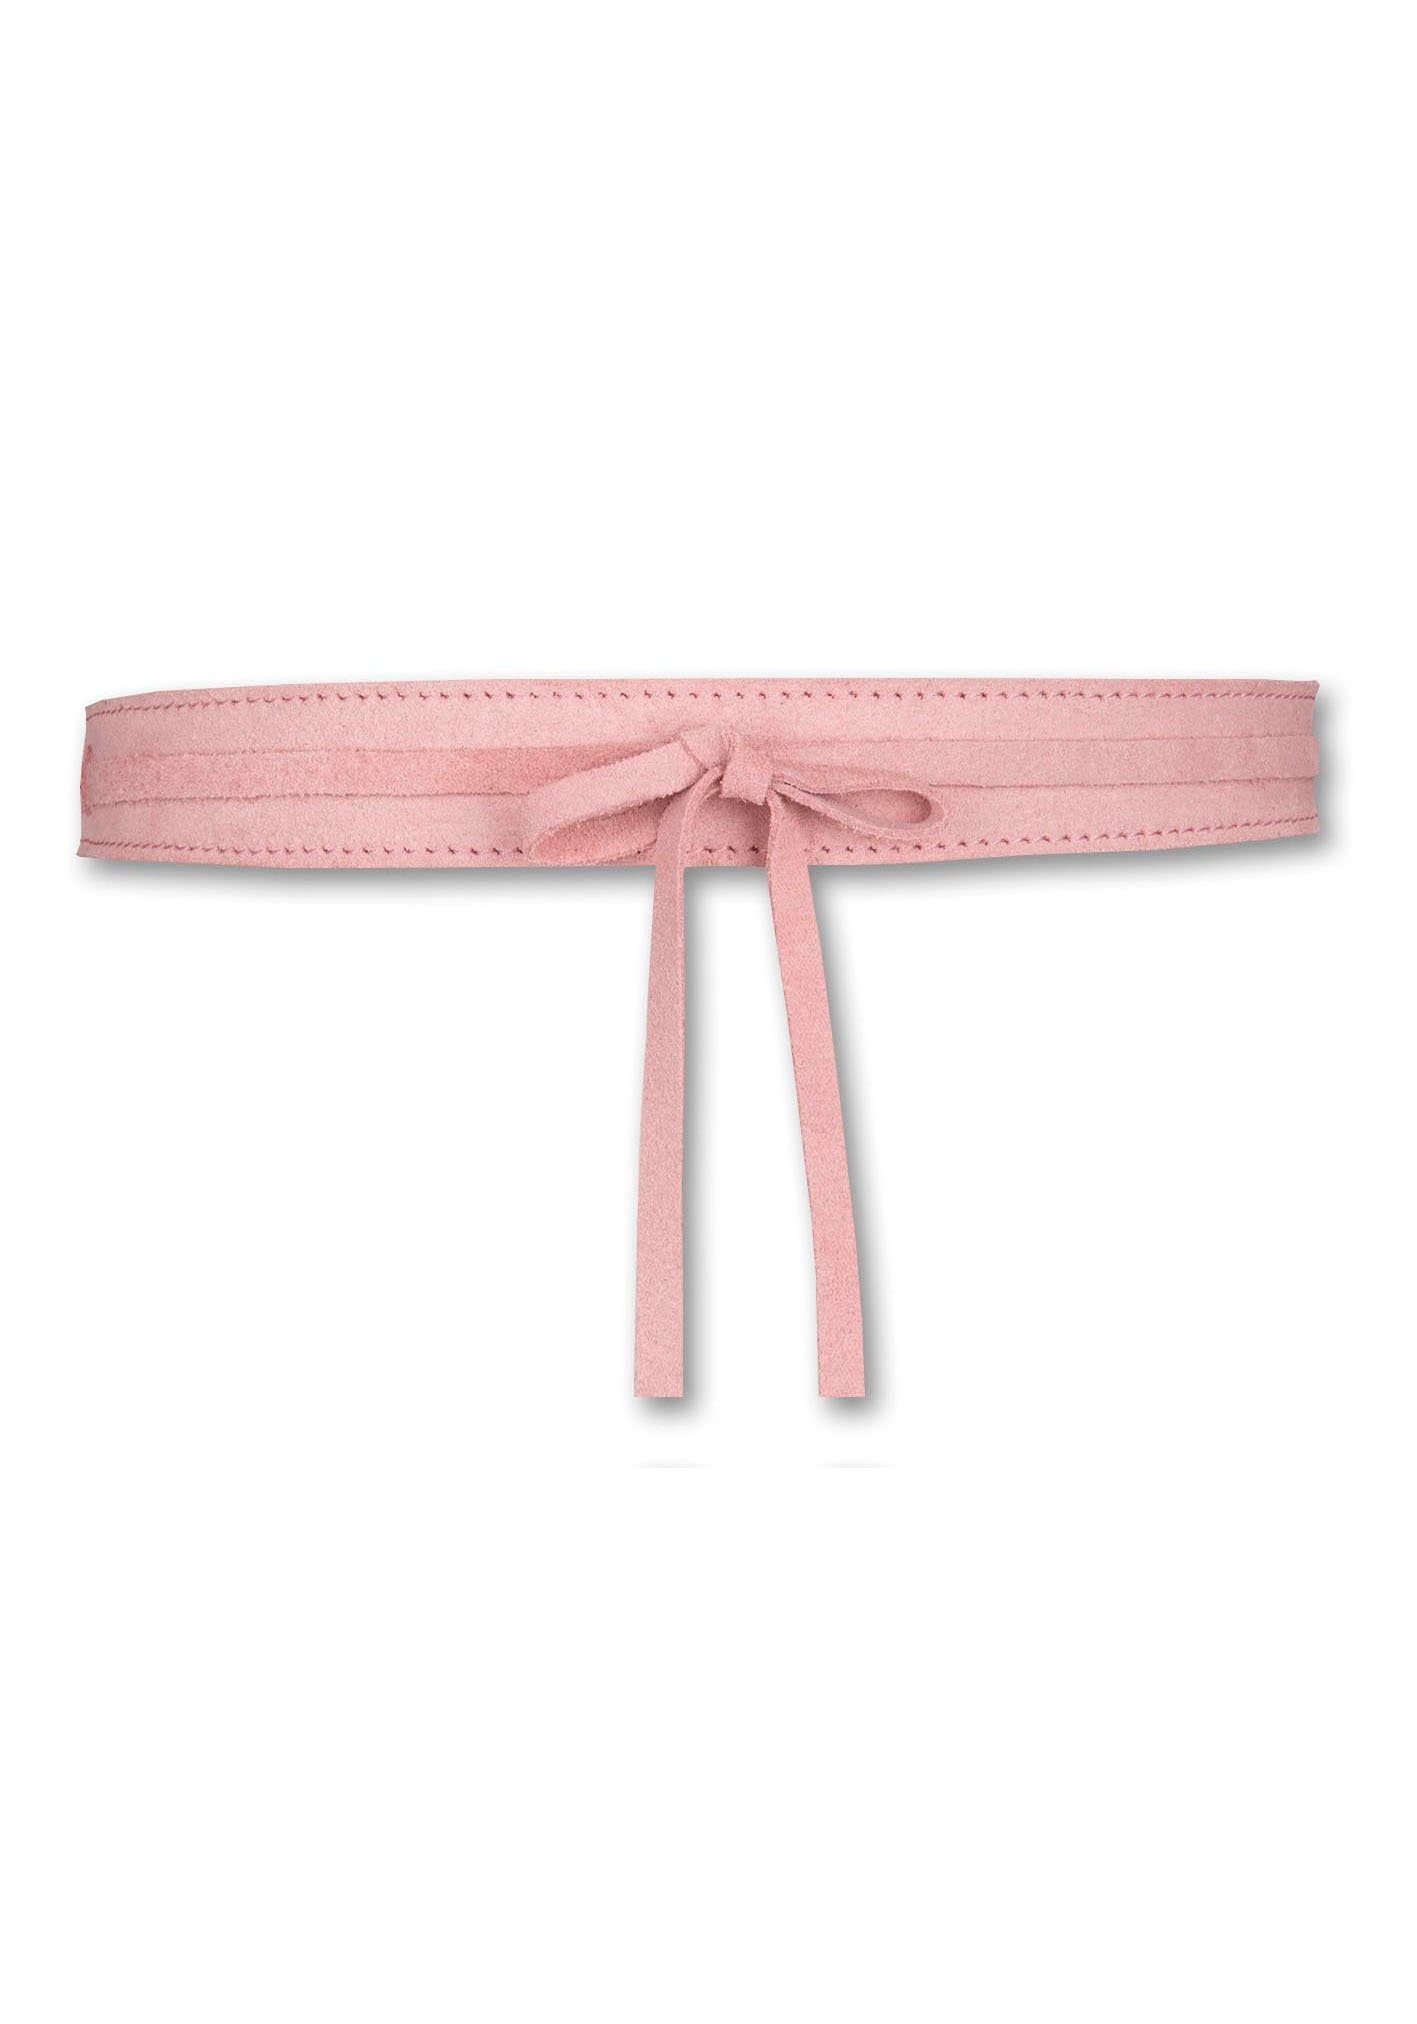 BERND GÖTZ Ledergürtel zum Binden für taillenbetonte Looks rosa